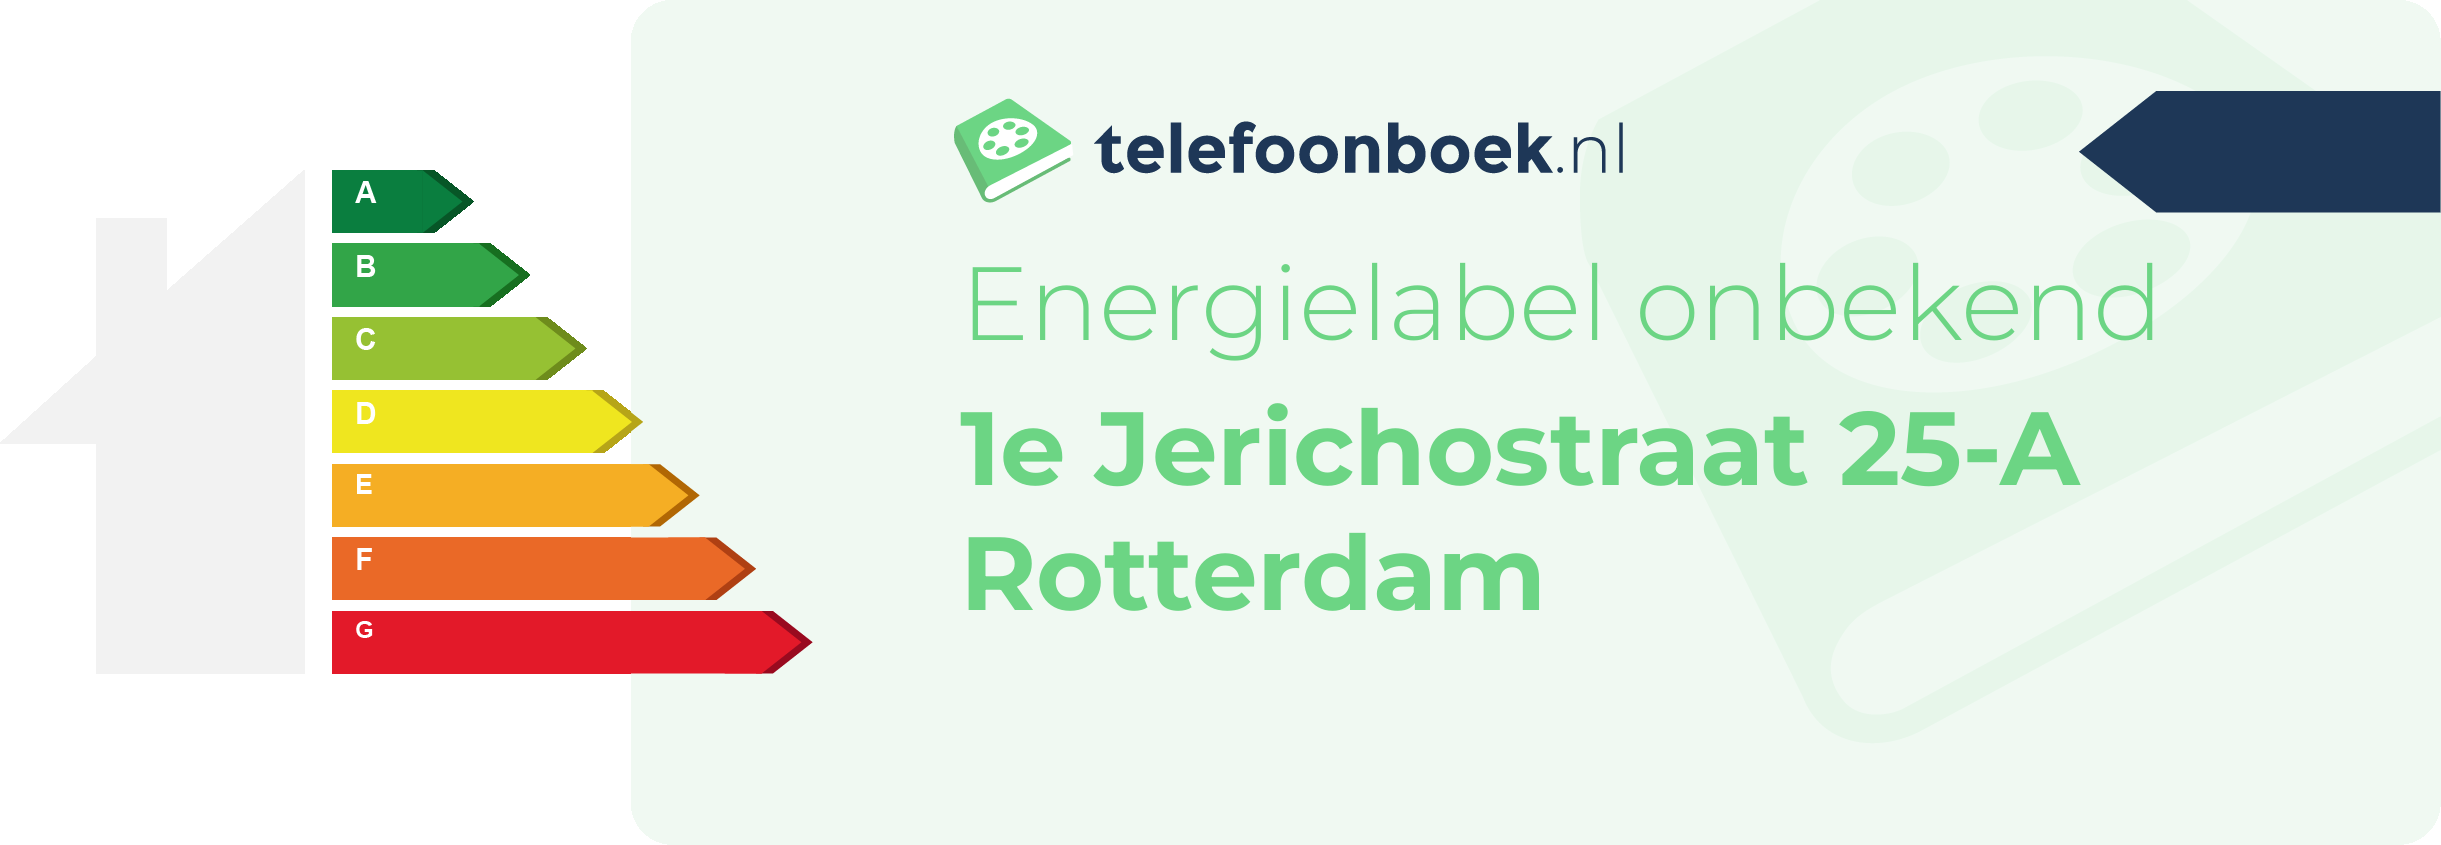 Energielabel 1e Jerichostraat 25-A Rotterdam